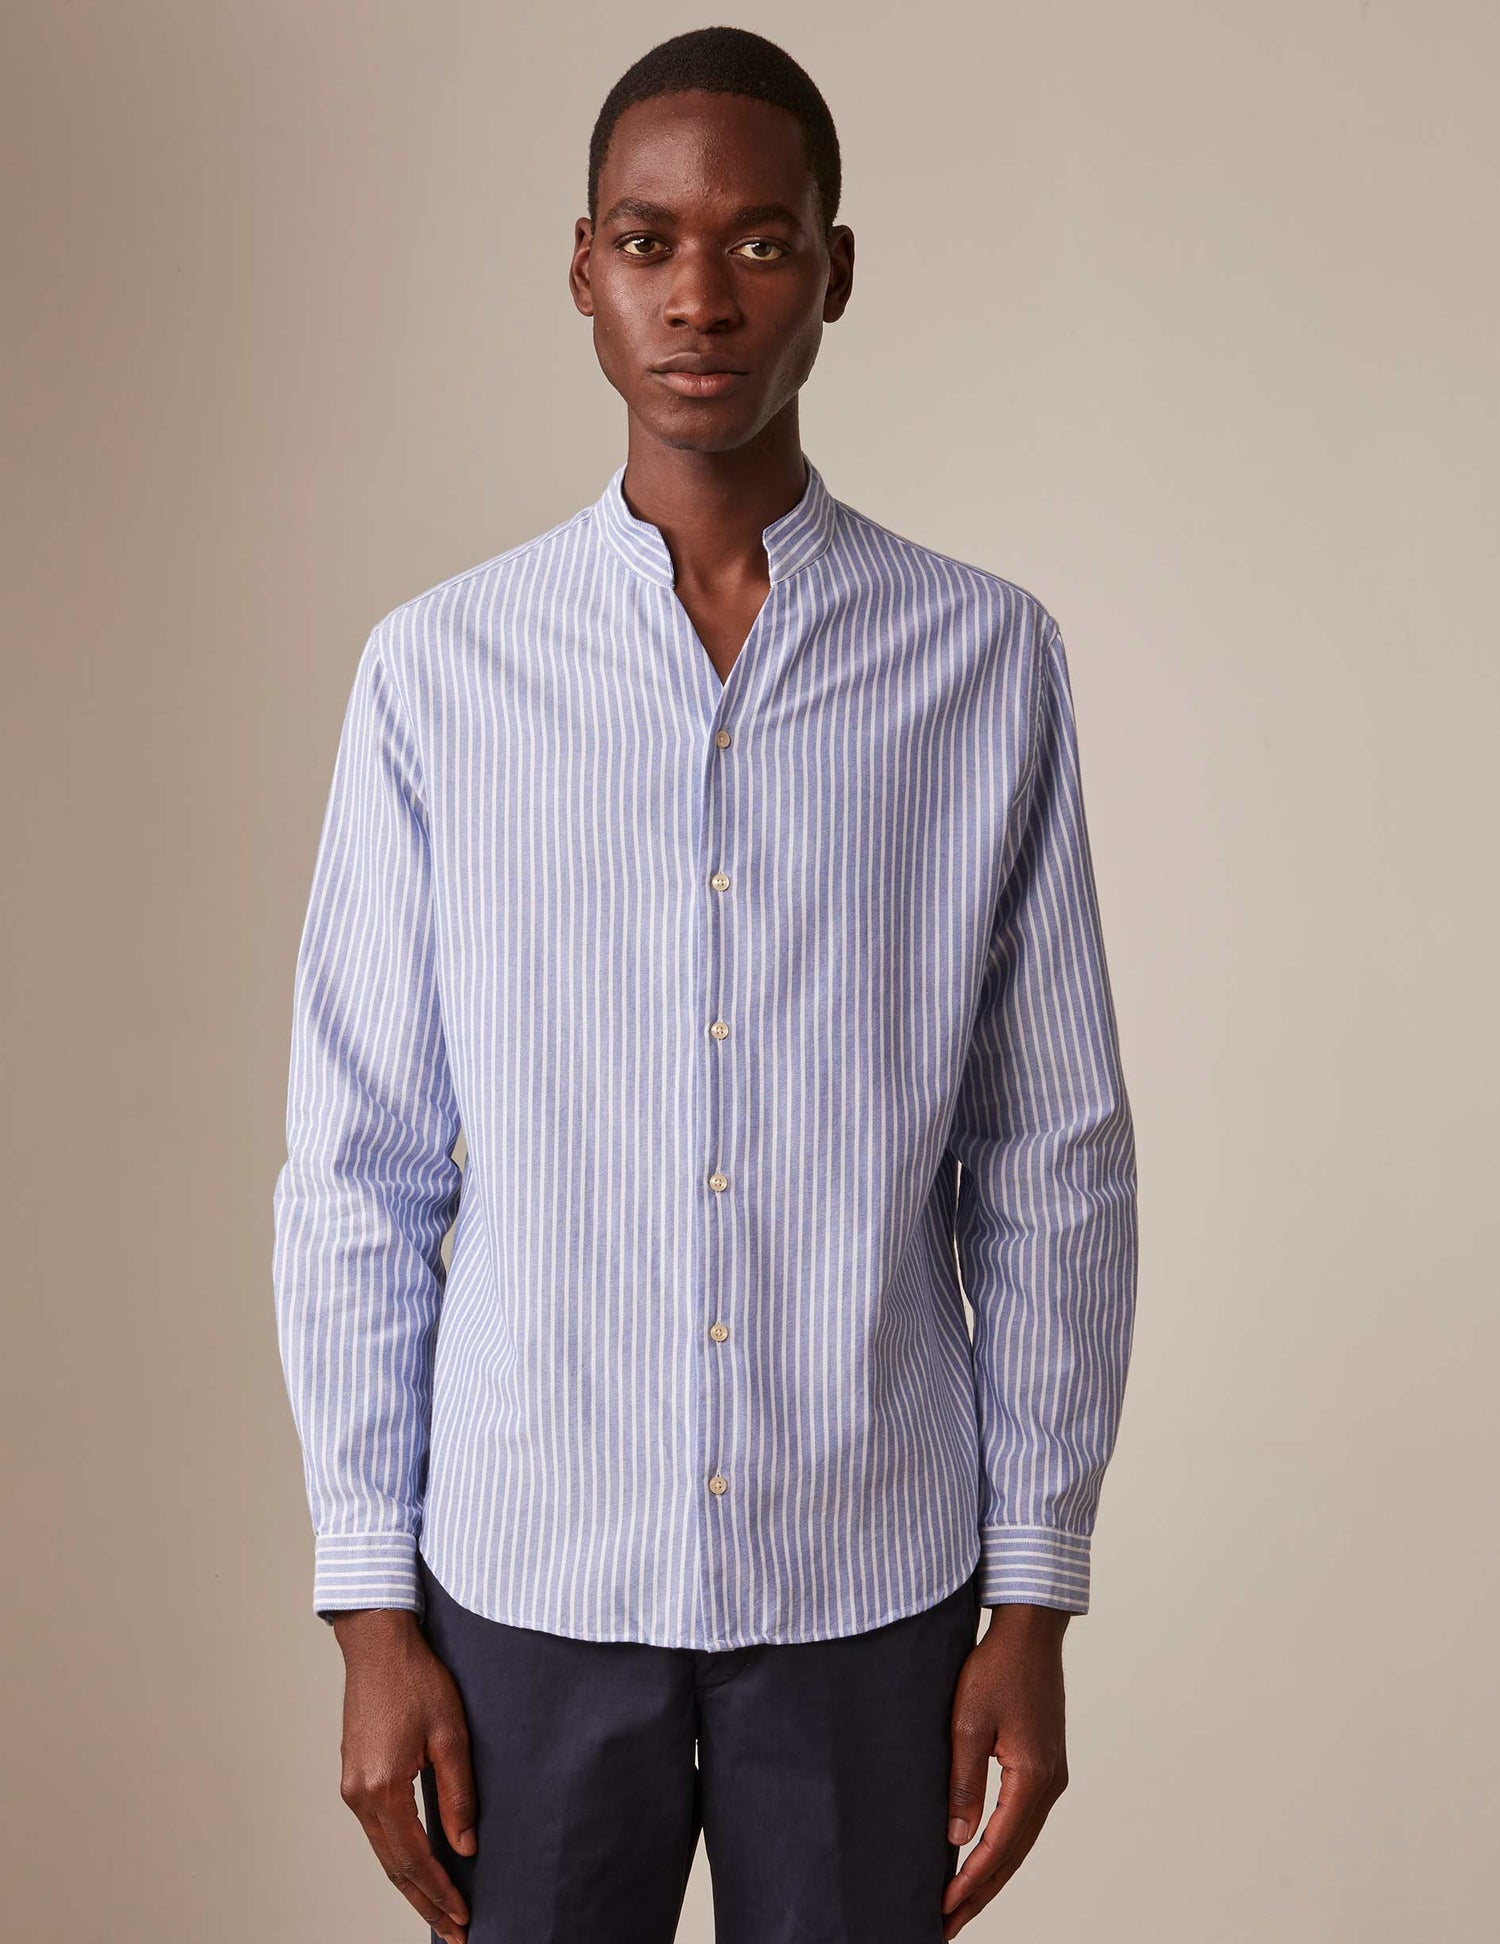 Blue striped Carl shirt - Oxford - Open straight Collar#3